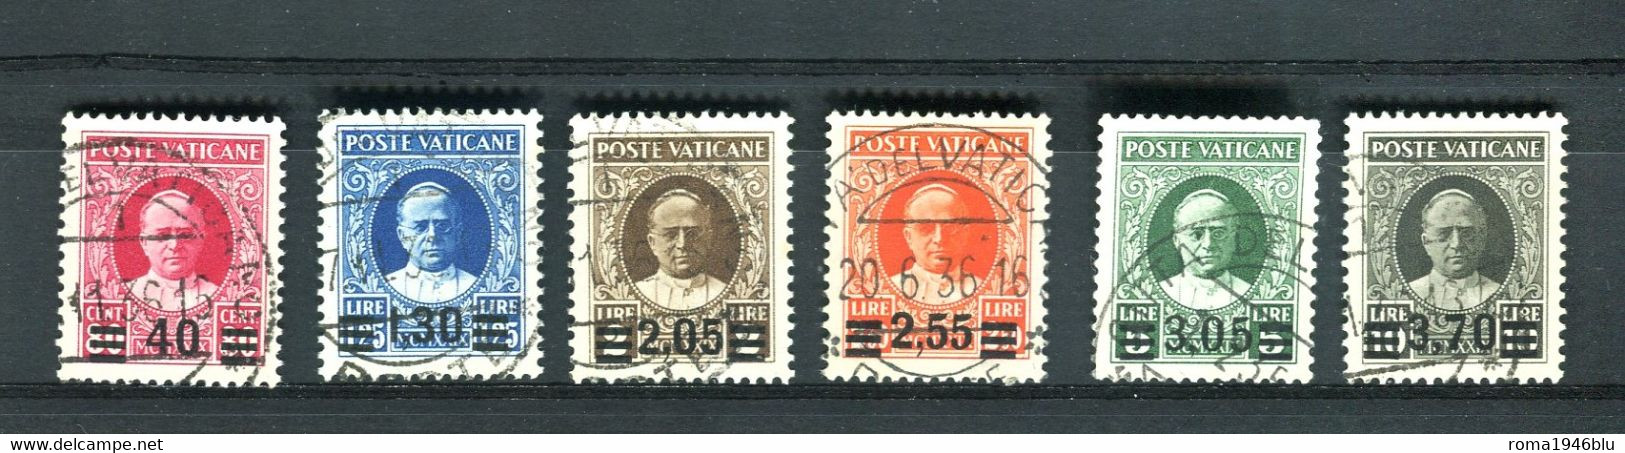 VATICANO 1934 PROVVISORIA SERIE CPL. USATA C. DIENA - Used Stamps